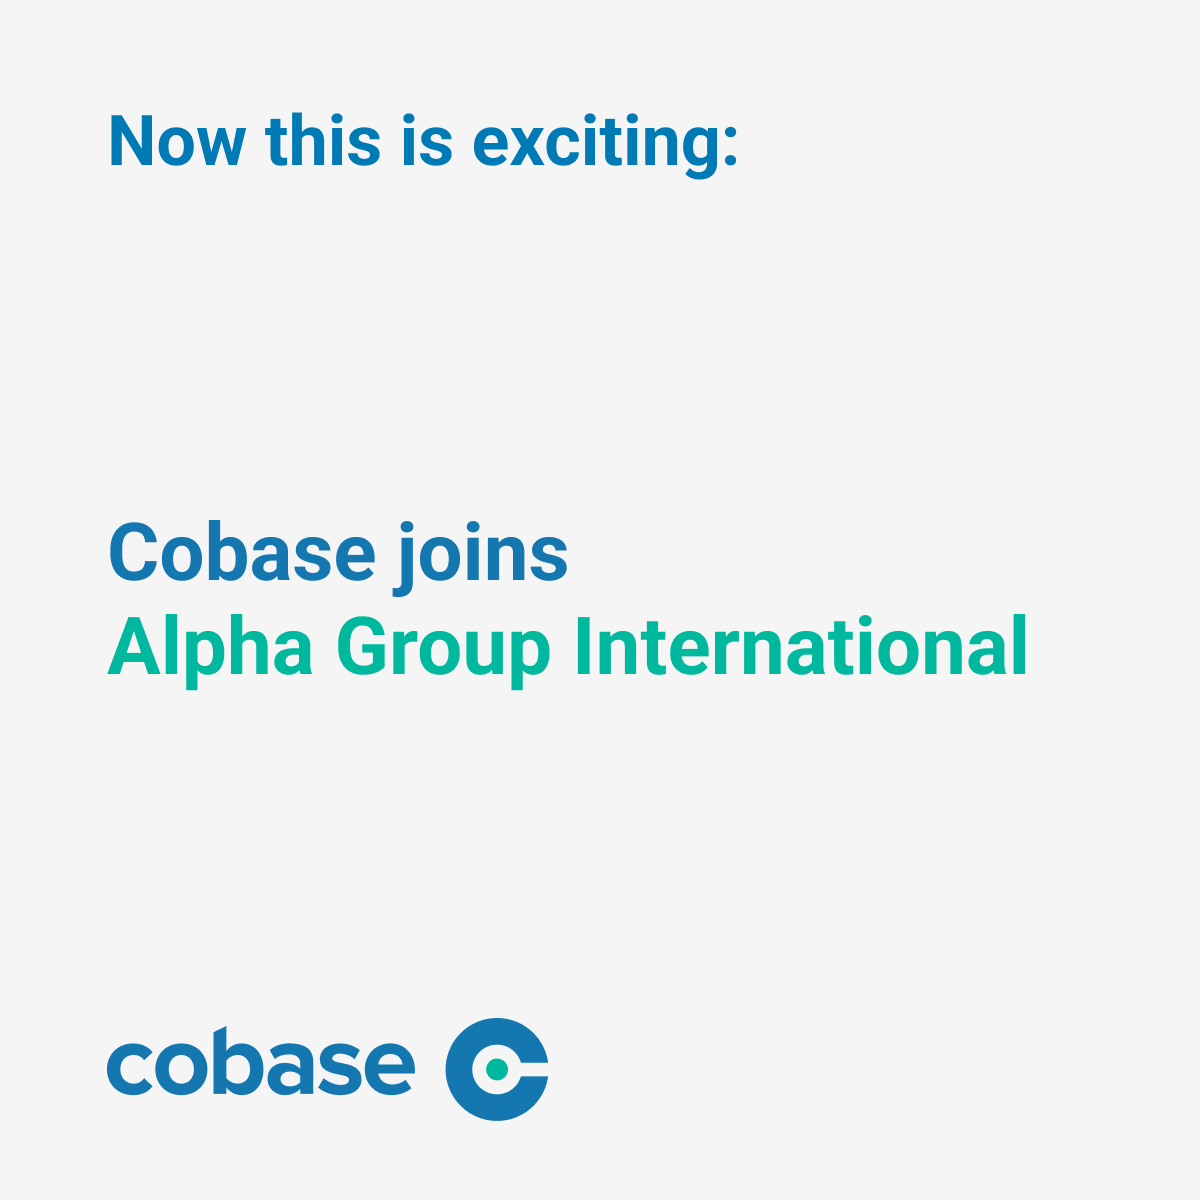 Cobase joins Alpha Group International